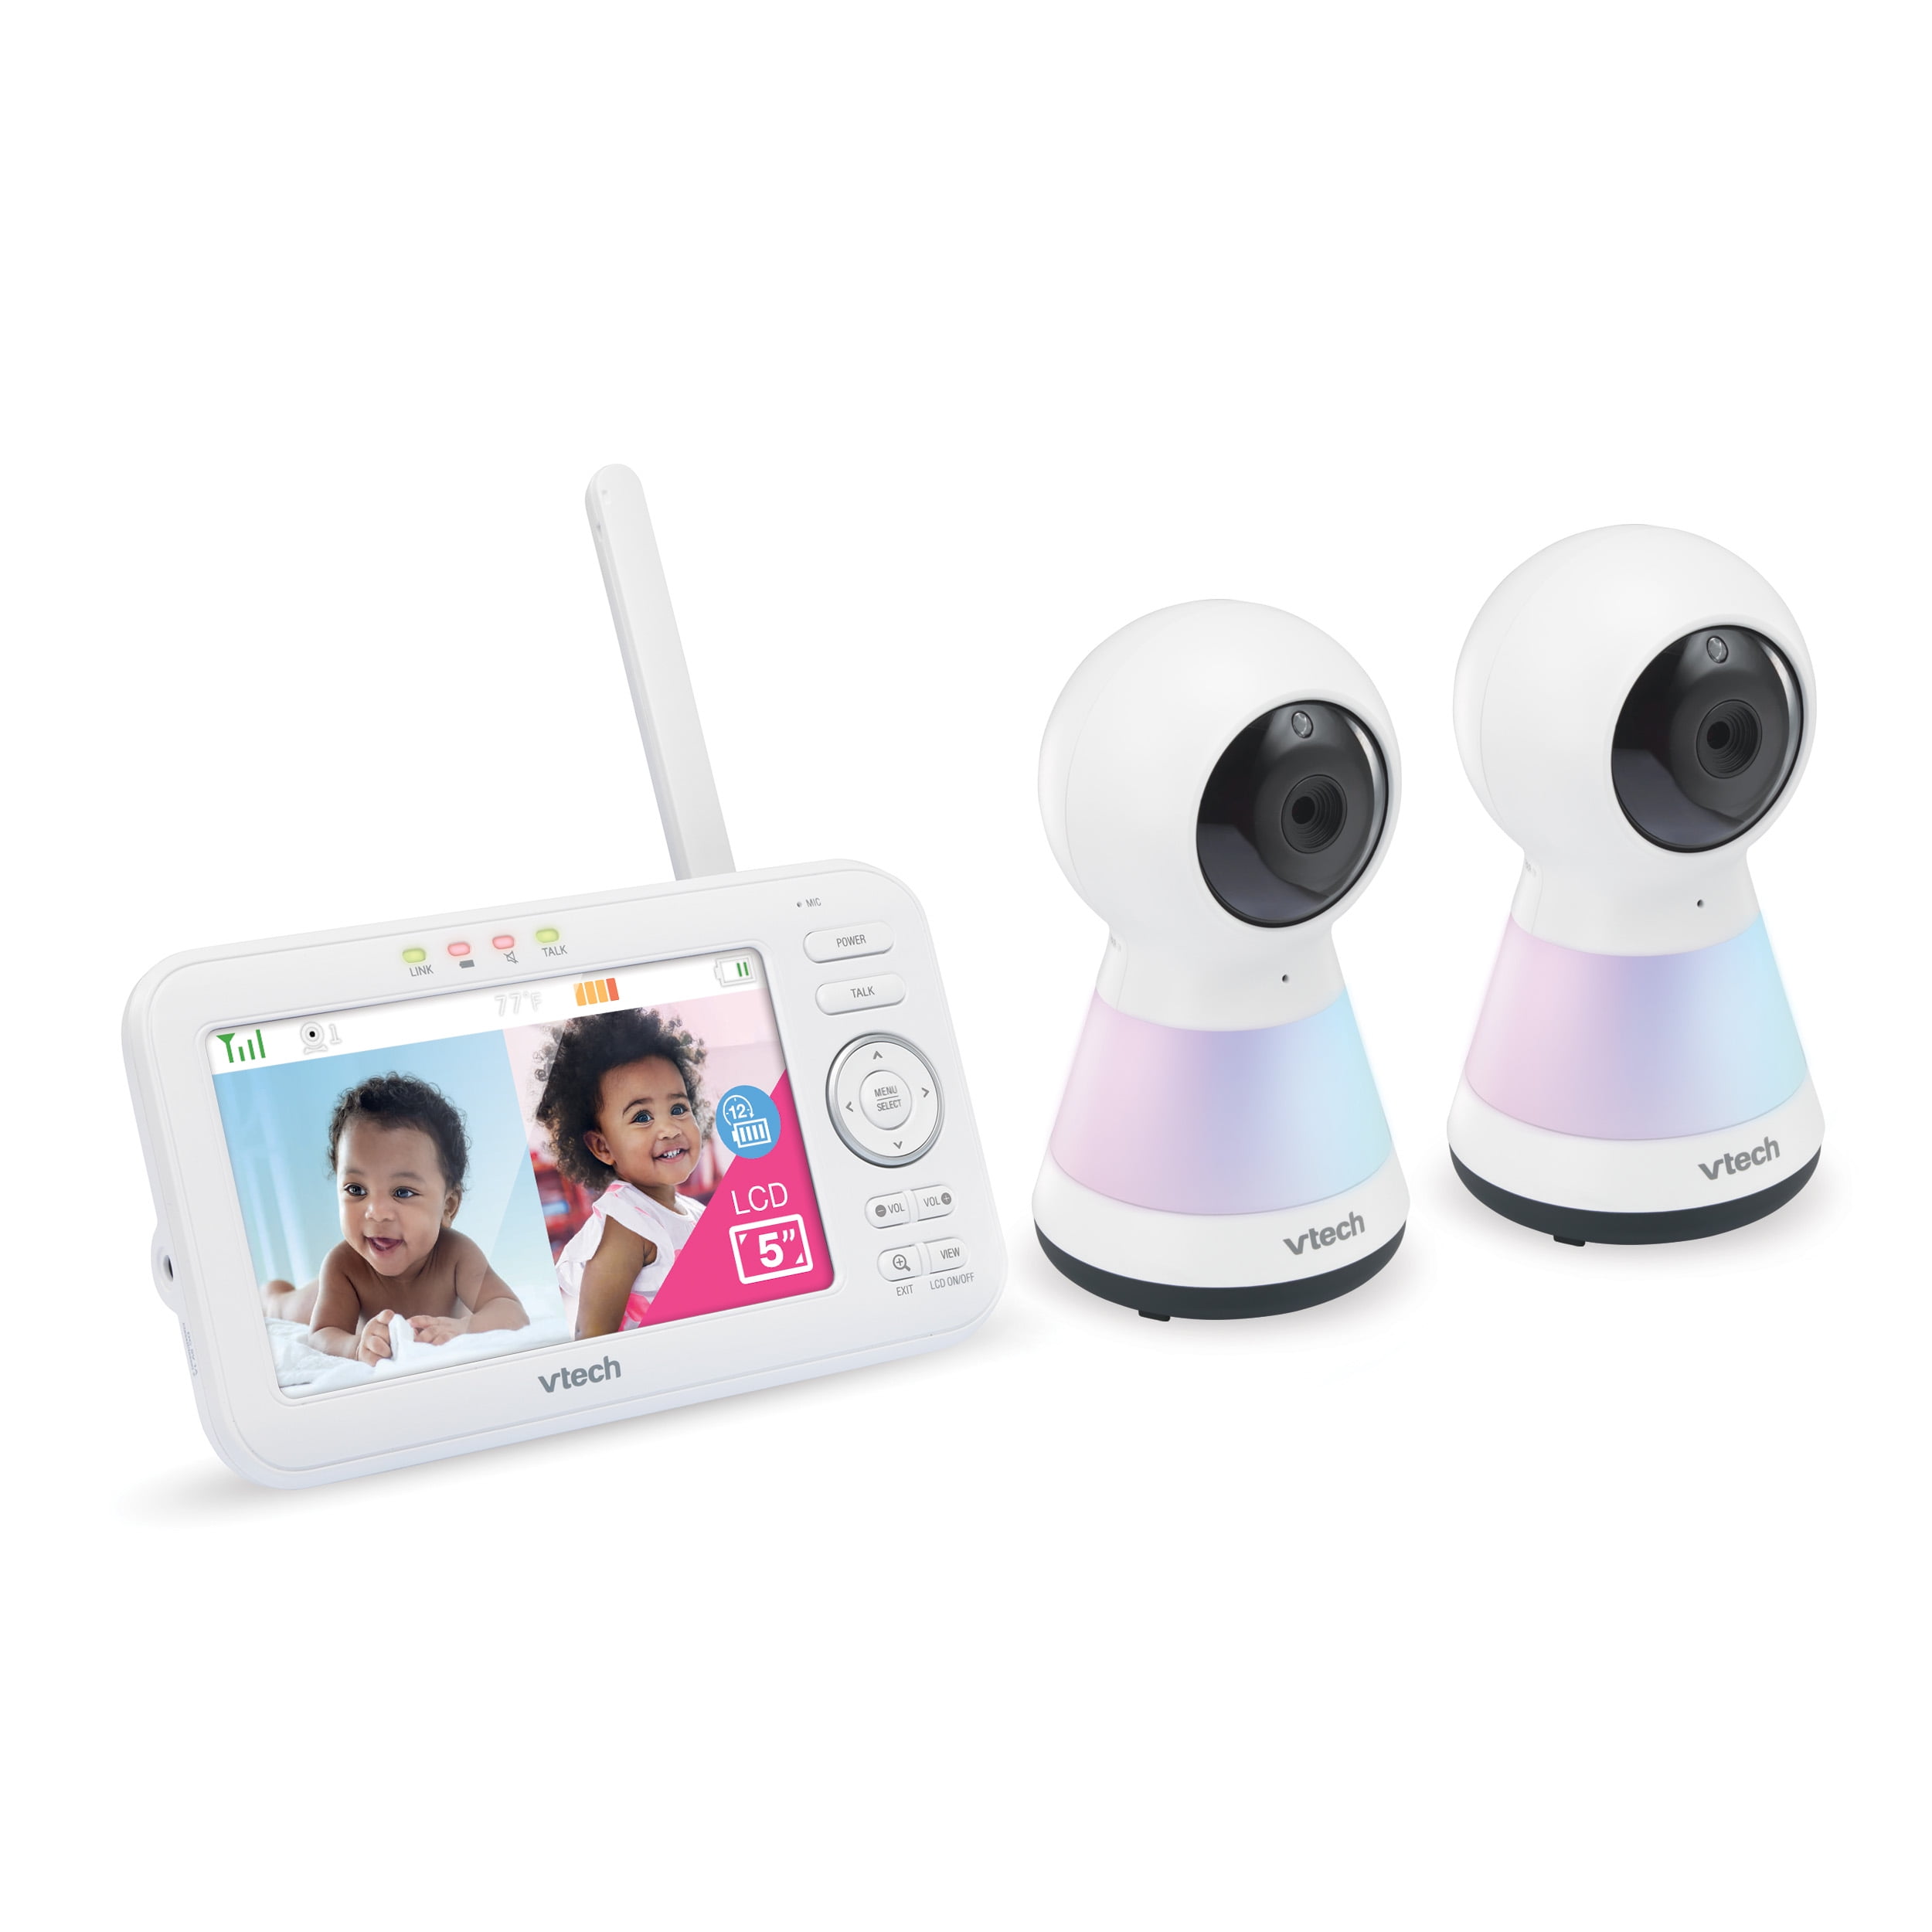 Vtech Vm5255 2 2 Camera 5 Digital Video Baby Monitor With Pan Scan And Night Light Walmart Com